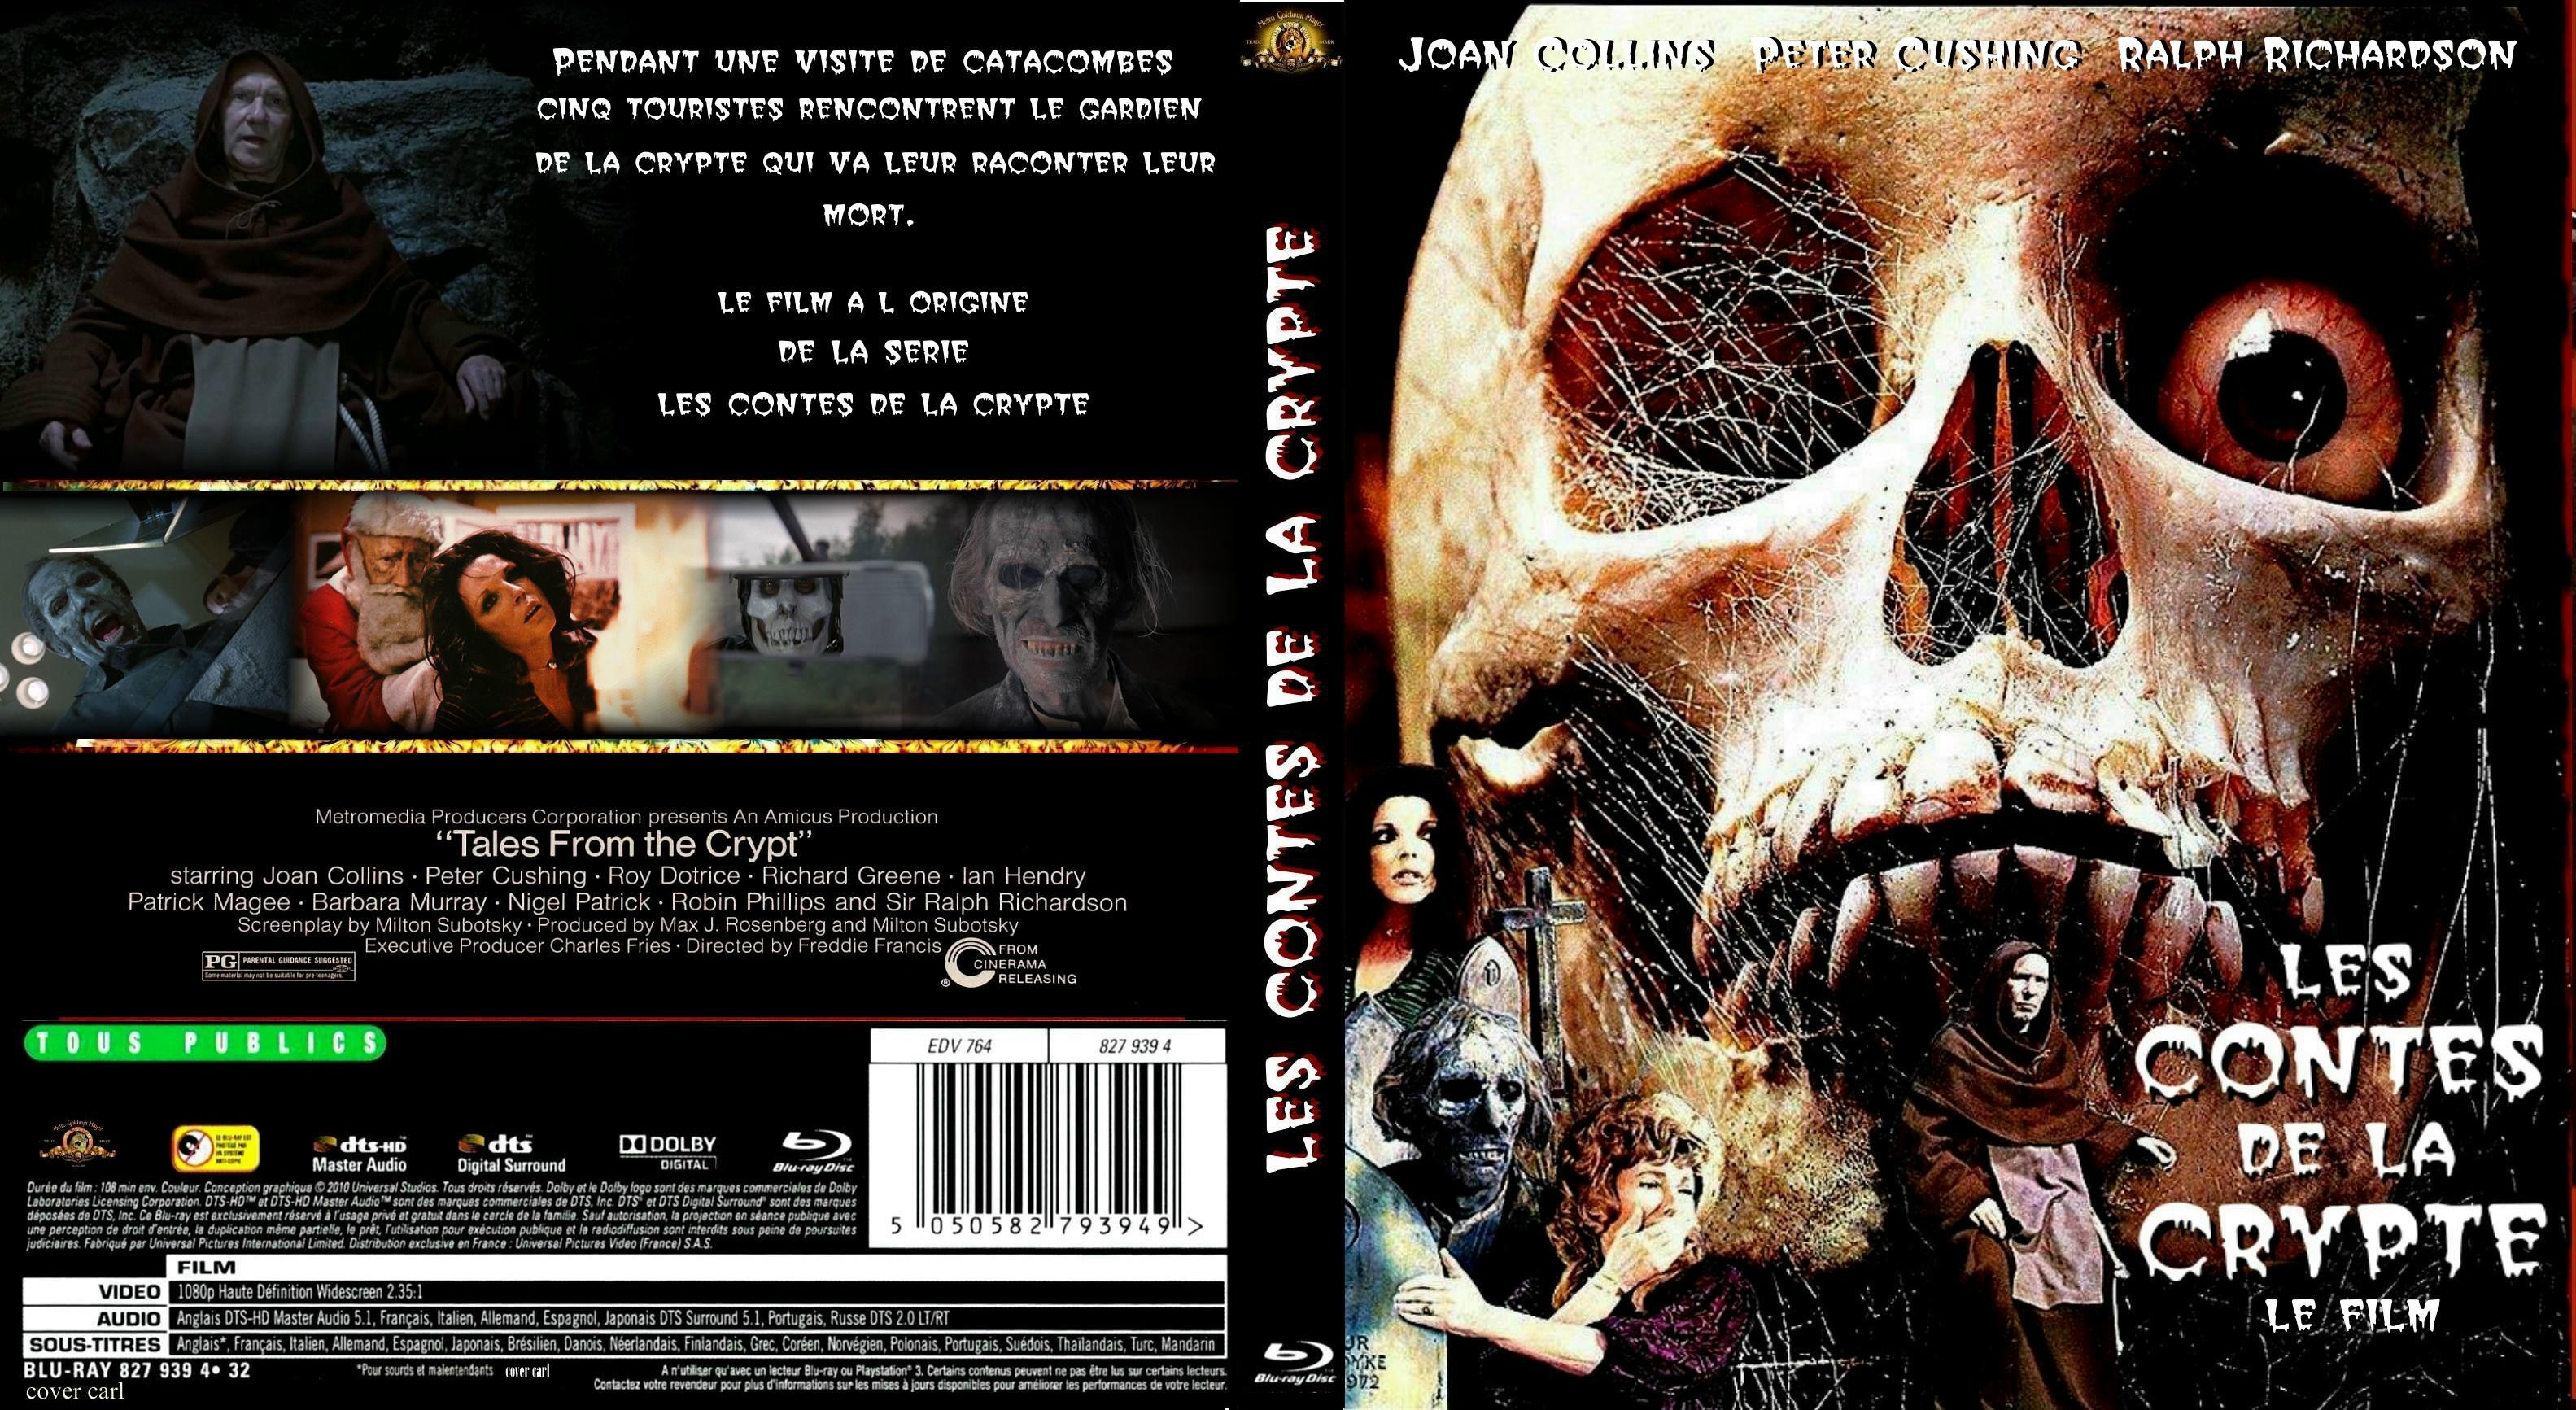 Jaquette DVD Les contes de la crypte le film custom (BLU-RAY)